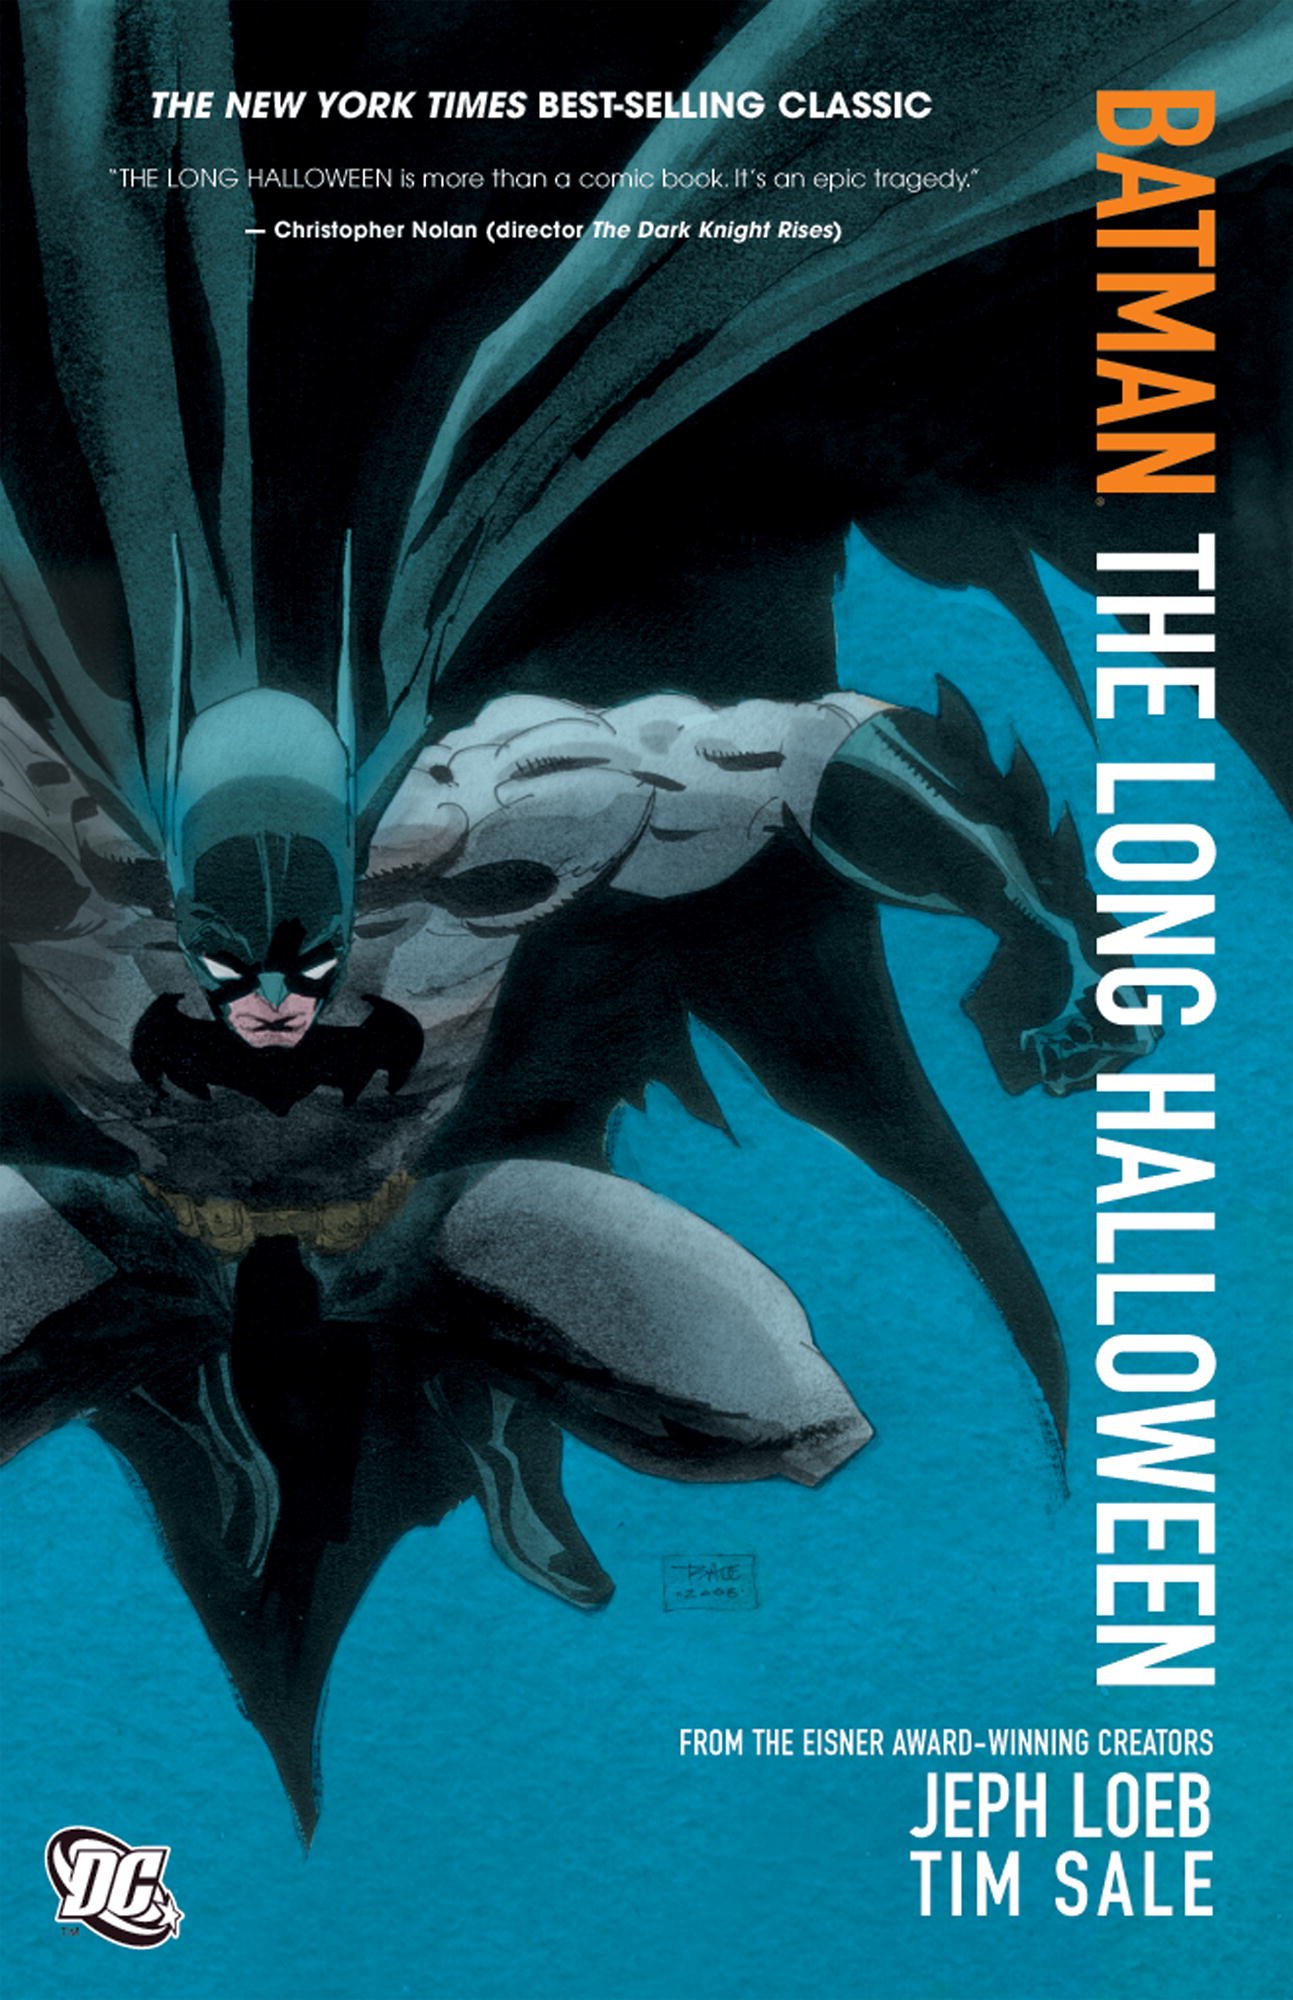 Coperta cărții: Batman The Long Halloween - lonnieyoungblood.com